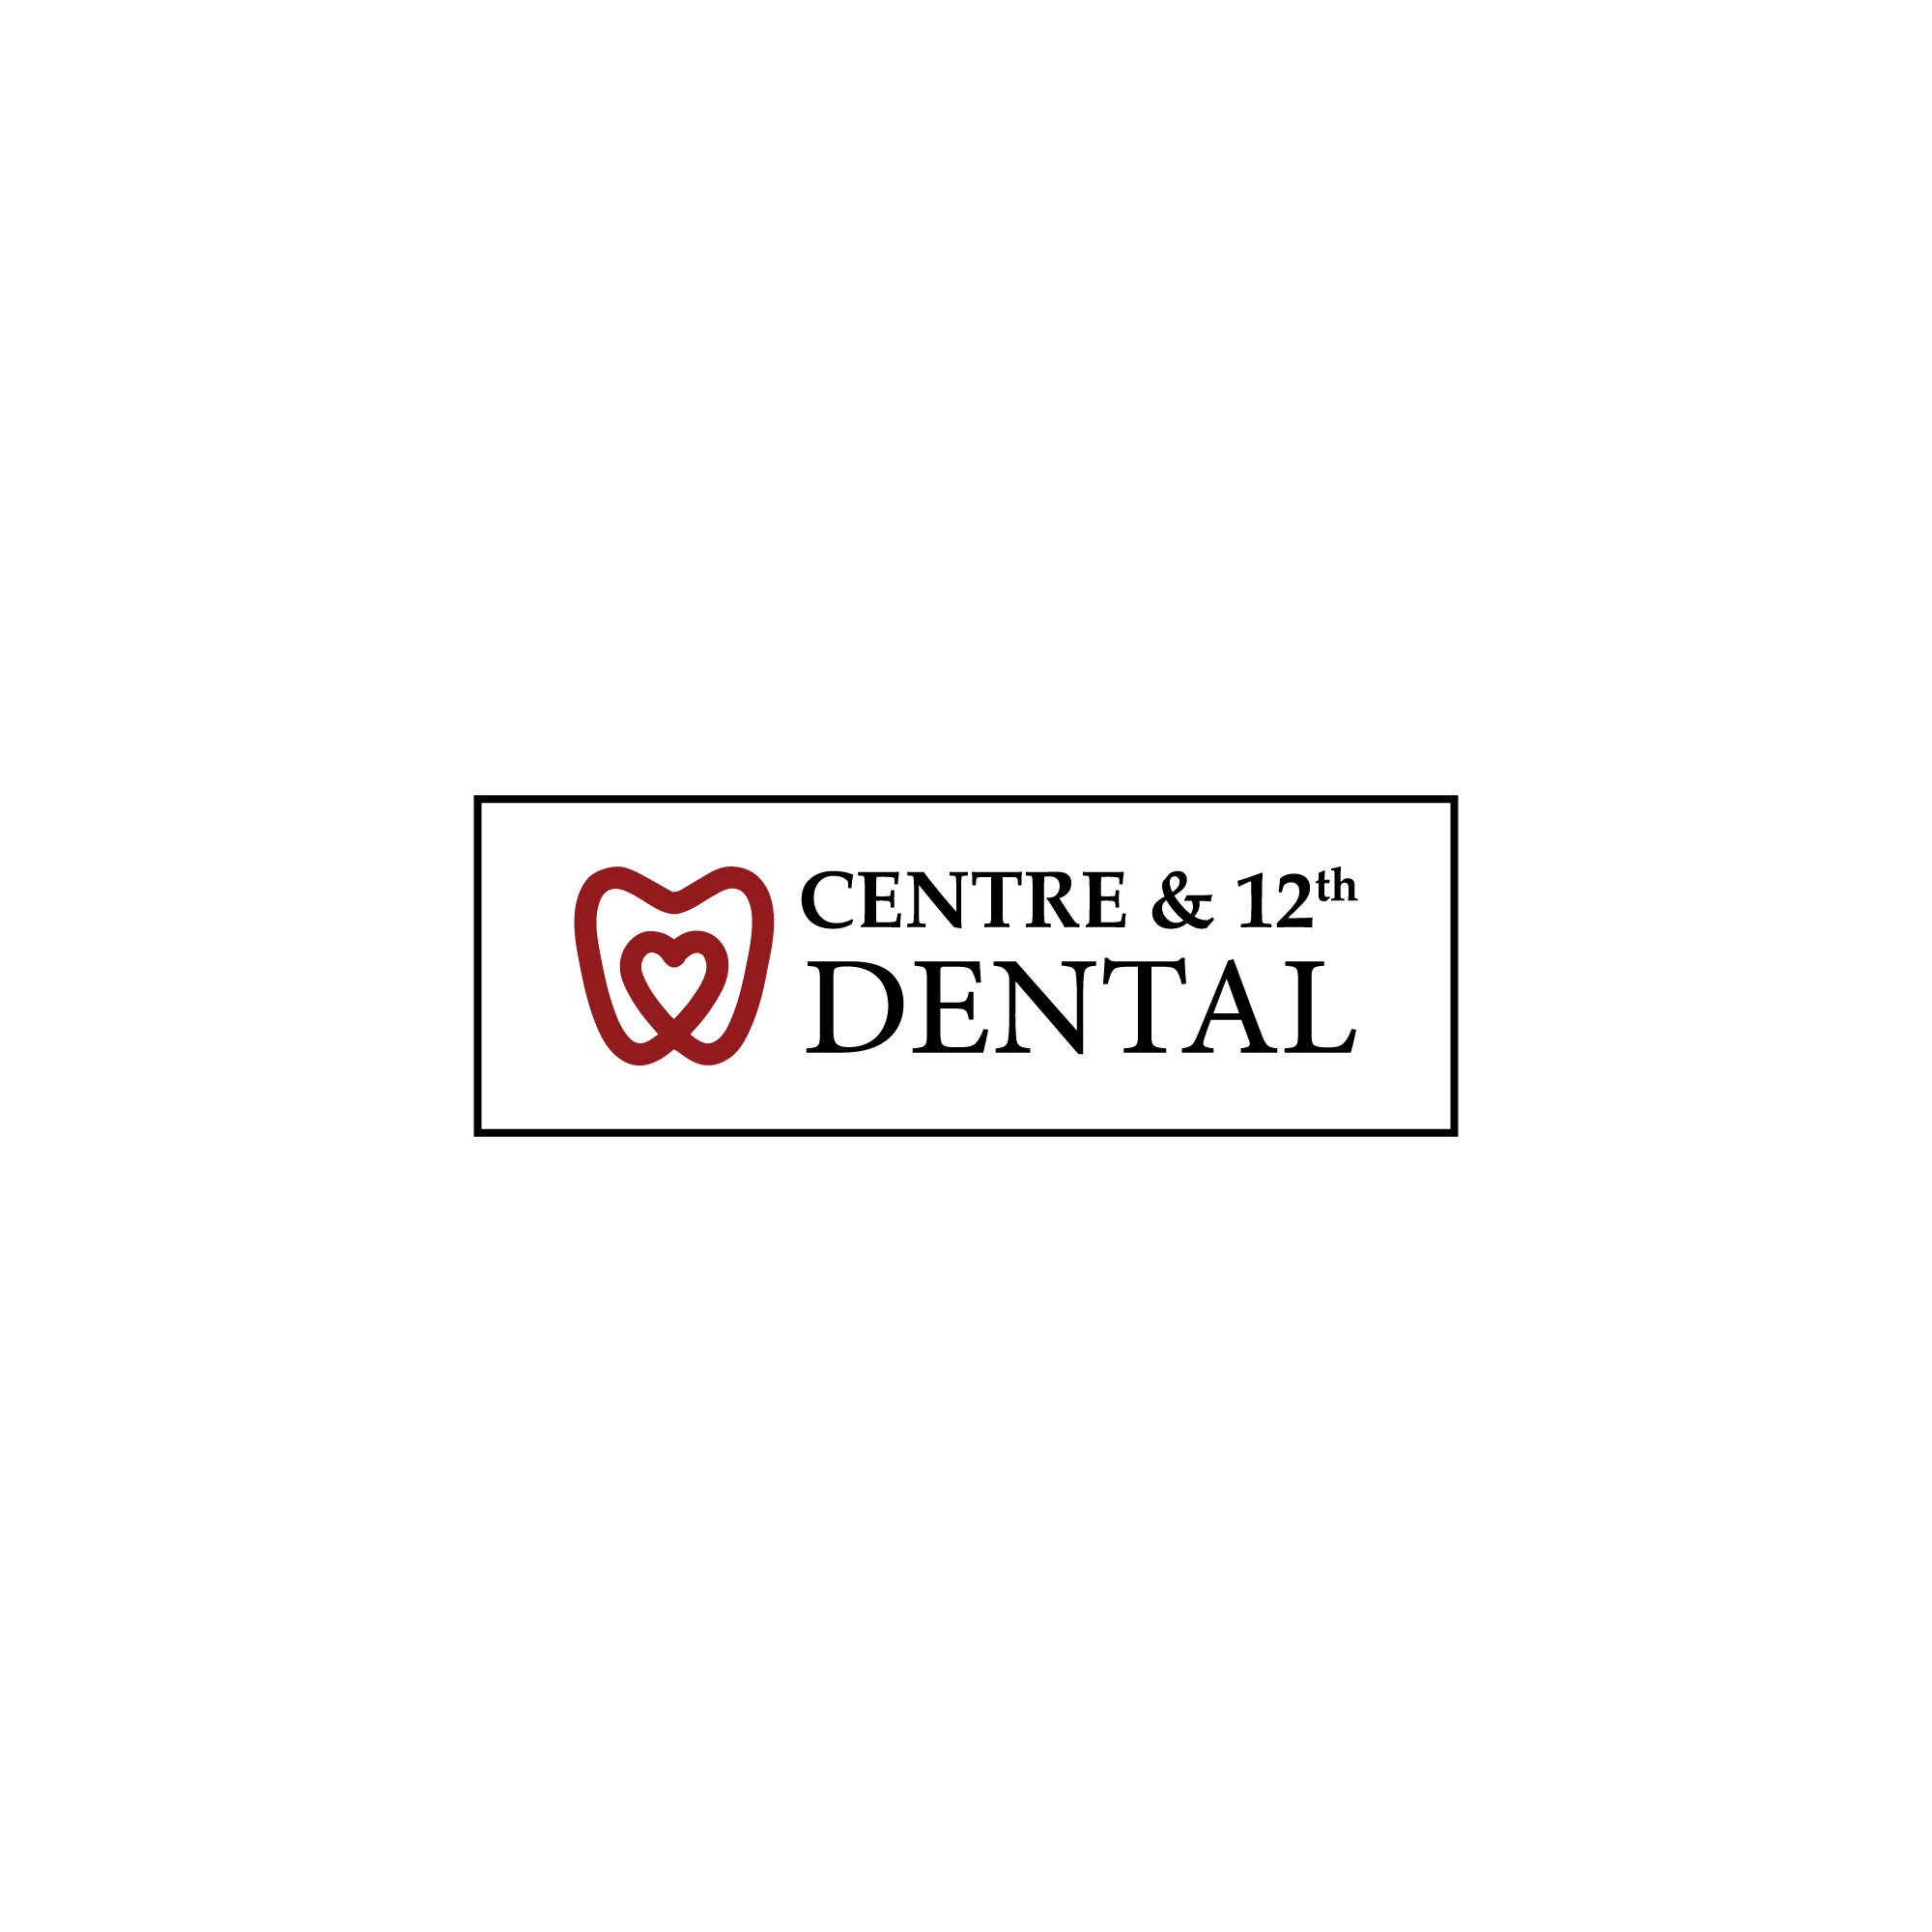 Centre & 12th Dental